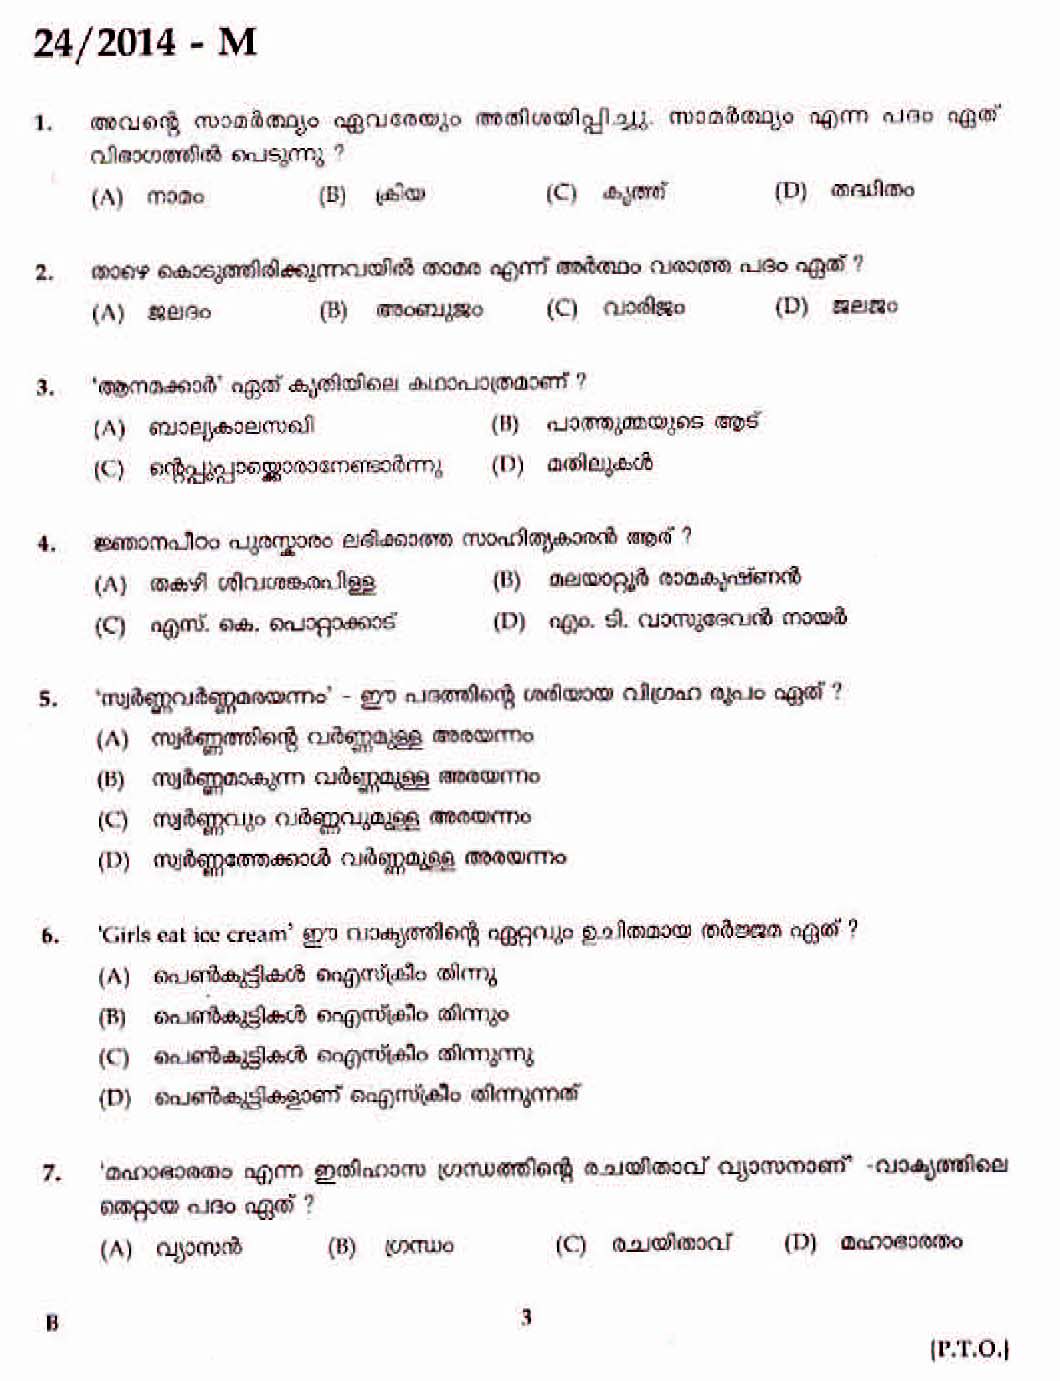 LD Clerk Malappuram Question Paper Malayalam 2014 Paper Code 242014 M 1